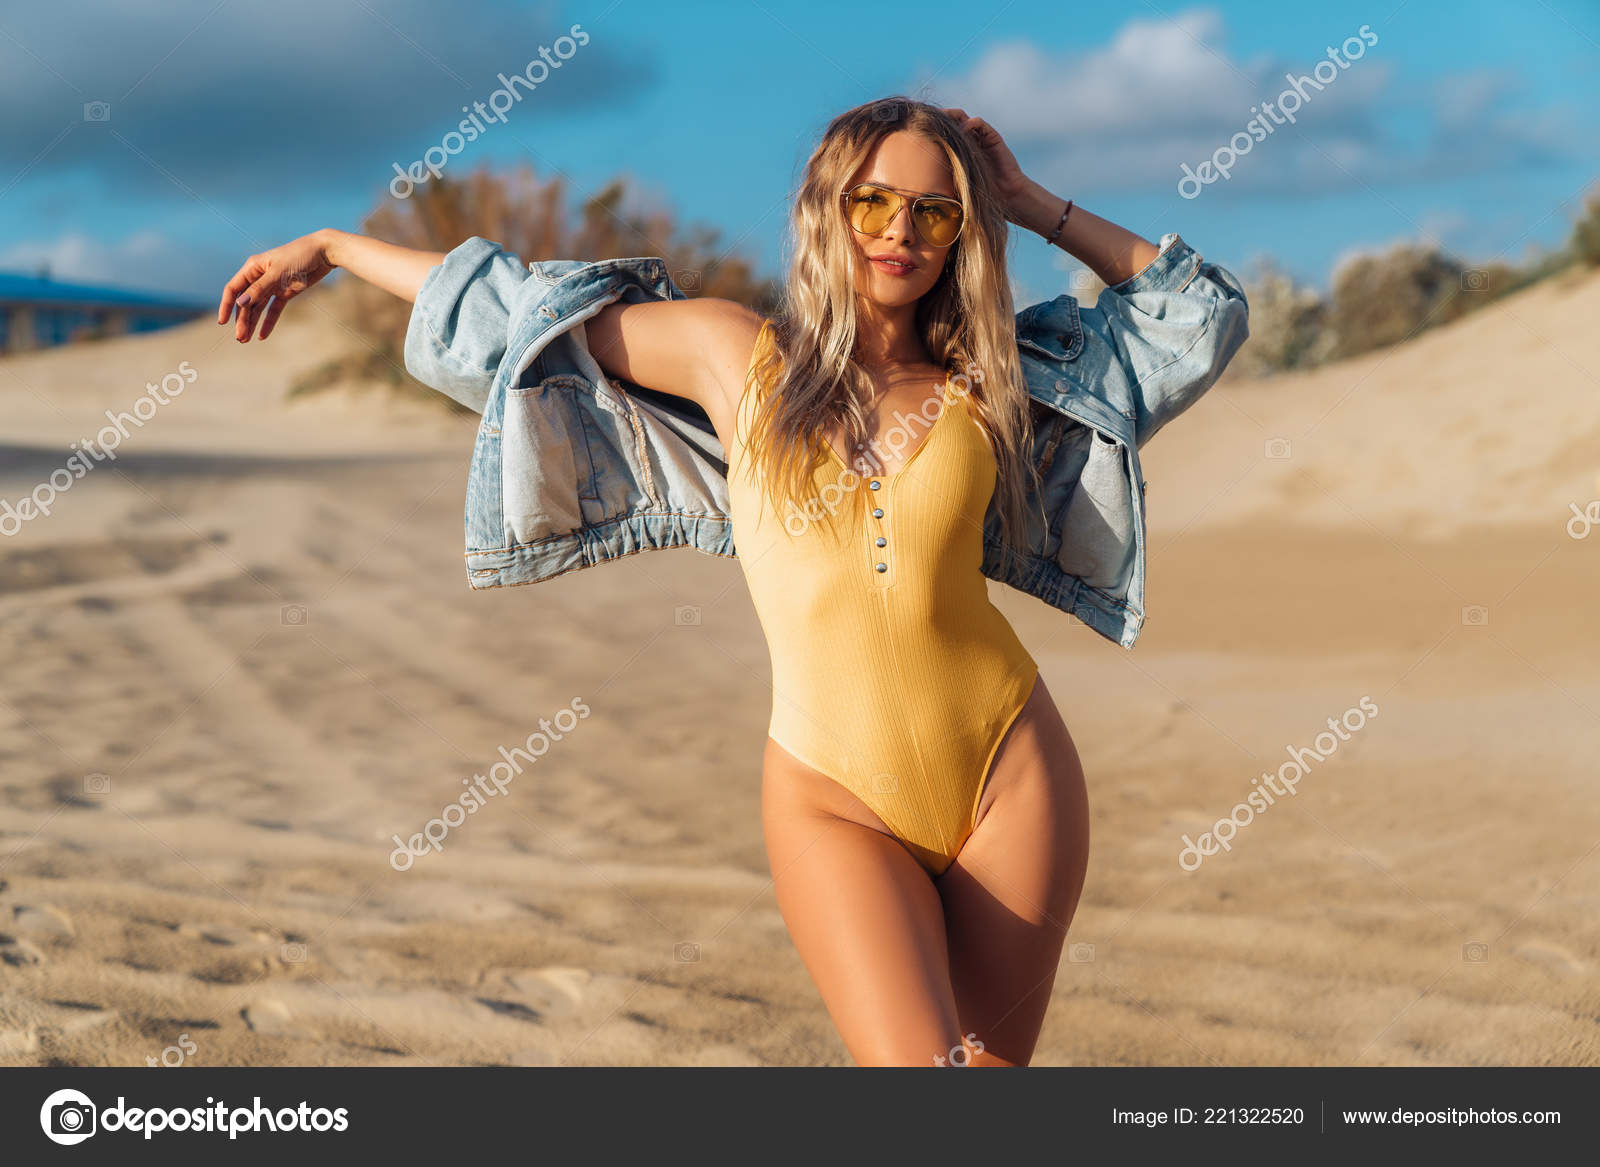 Blonde Bikini Model stock photo. Image of pretty, happiness - 40450148